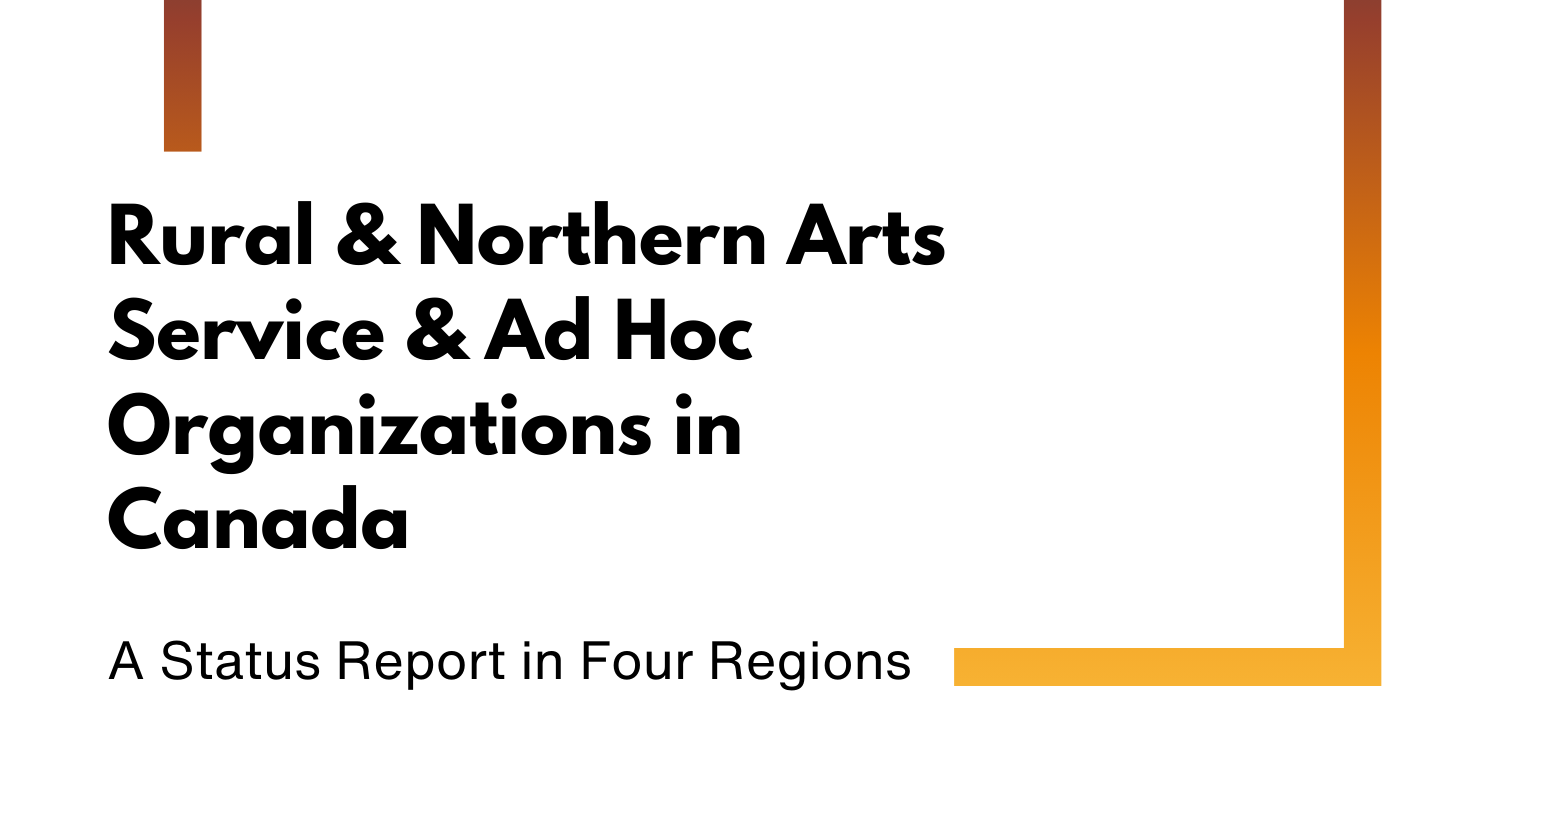 Rural & Northern Arts Service & Ad Hoc Organizations in Canada